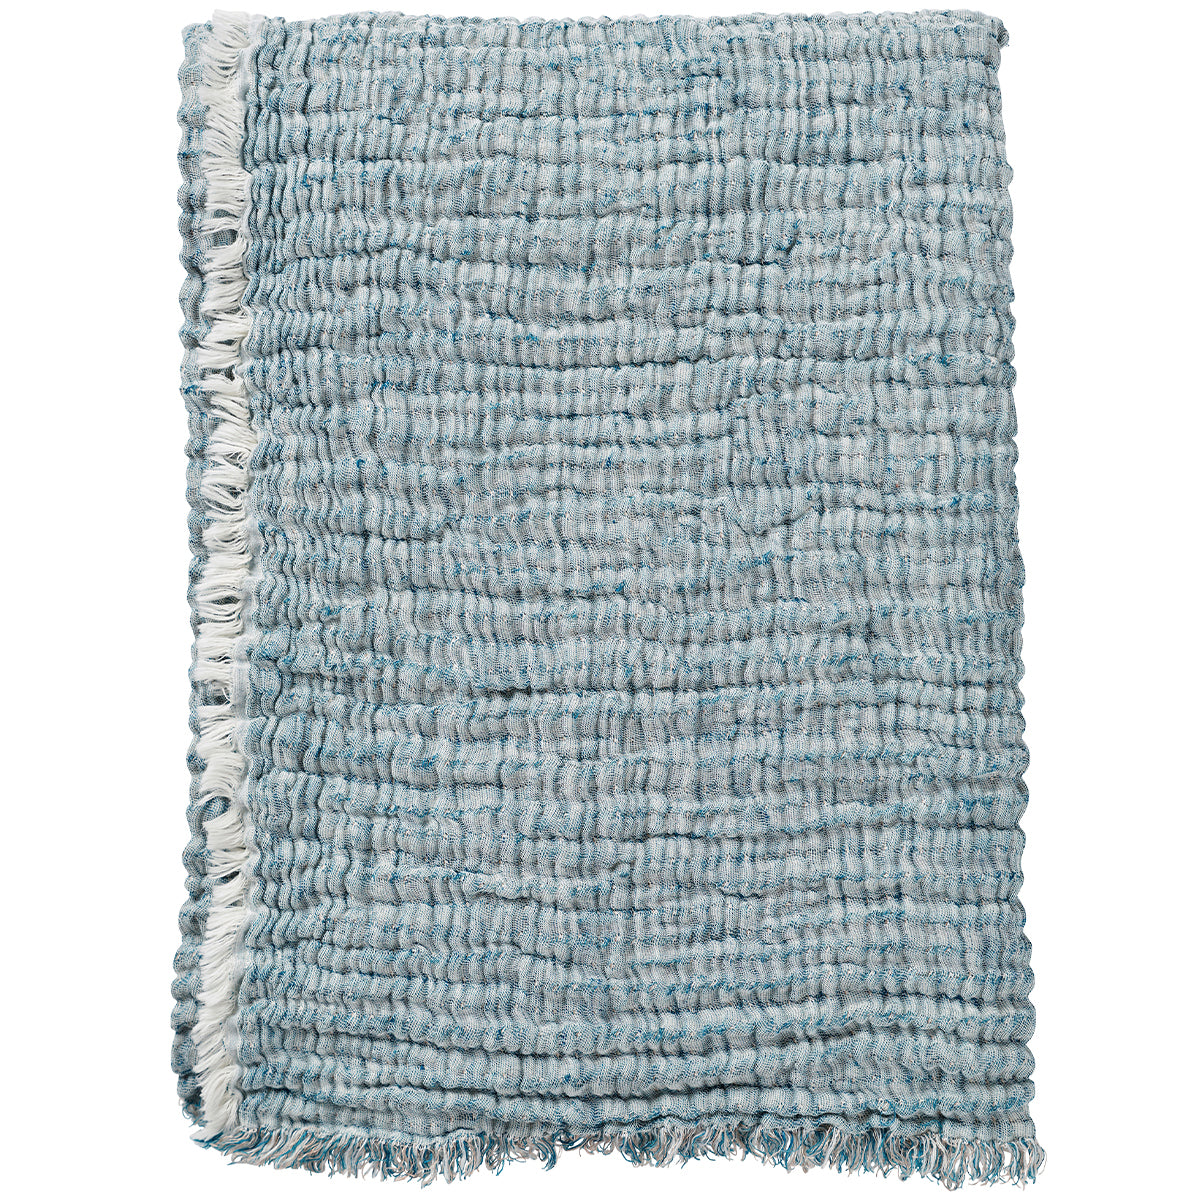 Duo Blue 130x170cm Organic Cotton/Linen Blanket